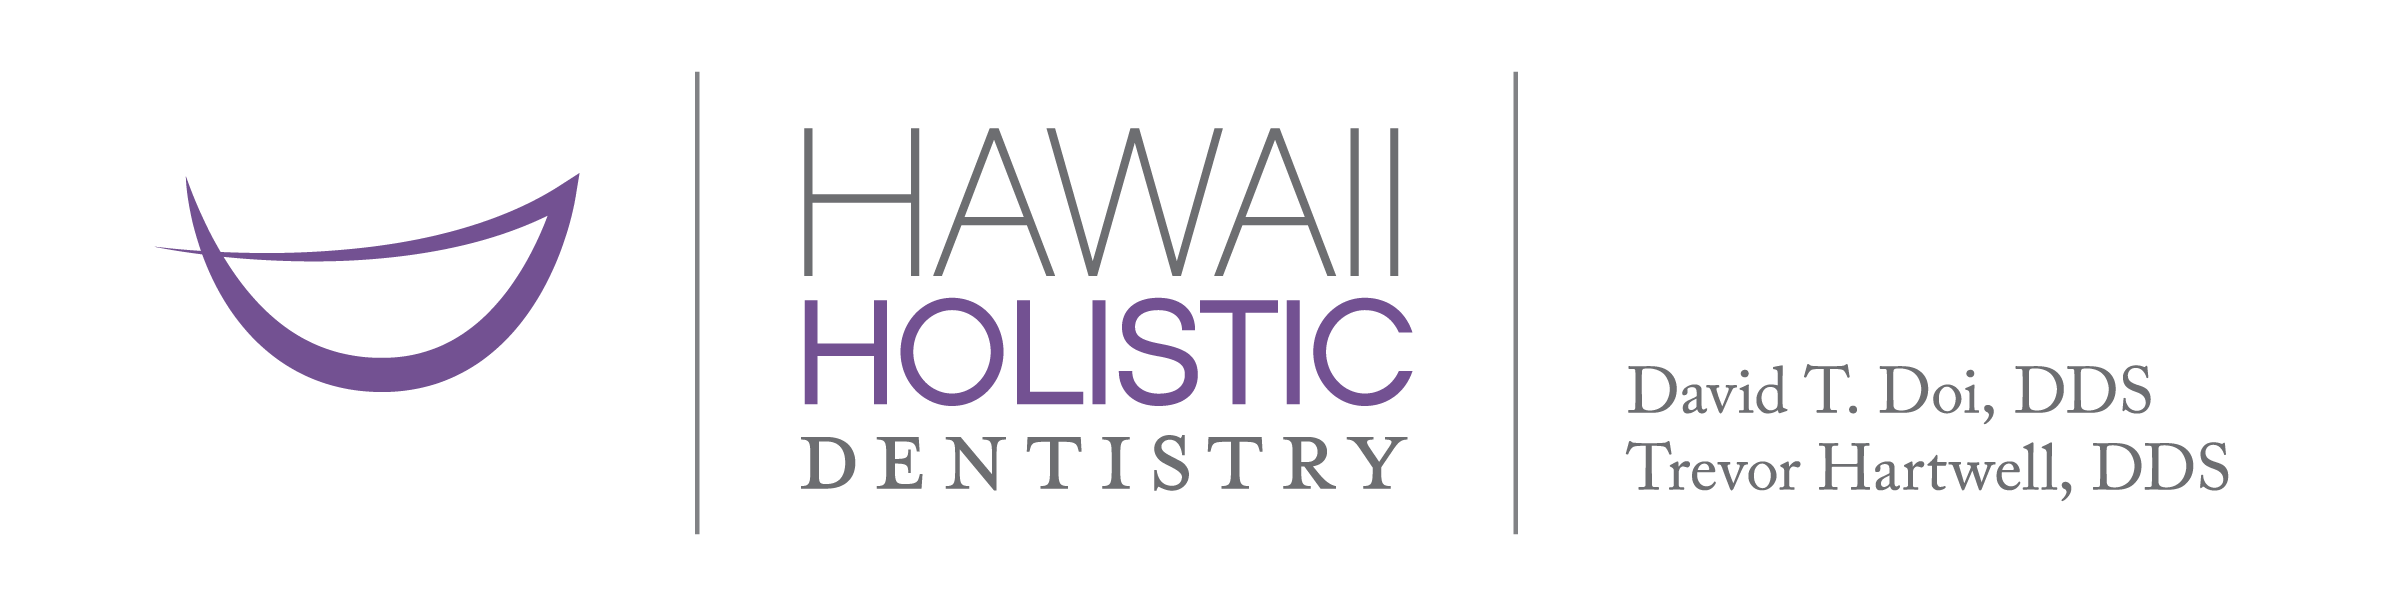 Hawaii Holistic Dentistry